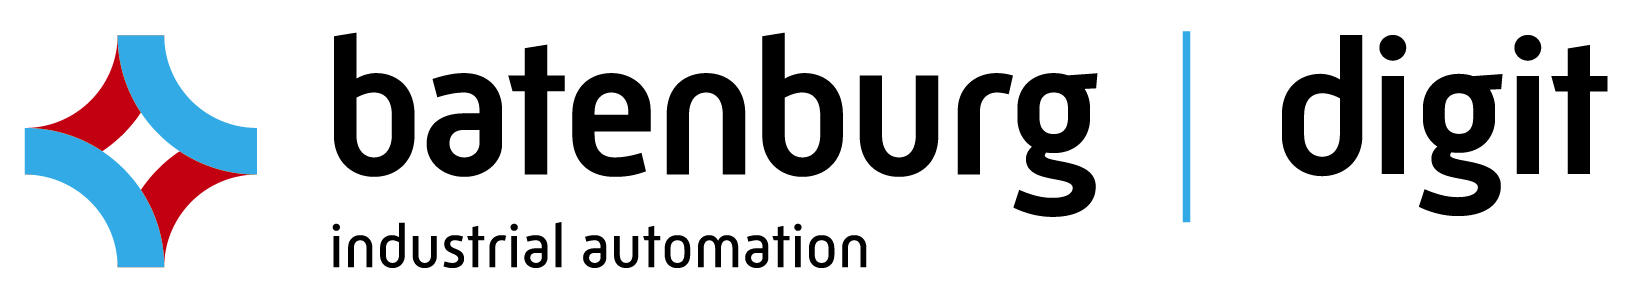 Logo Batenburg Digit